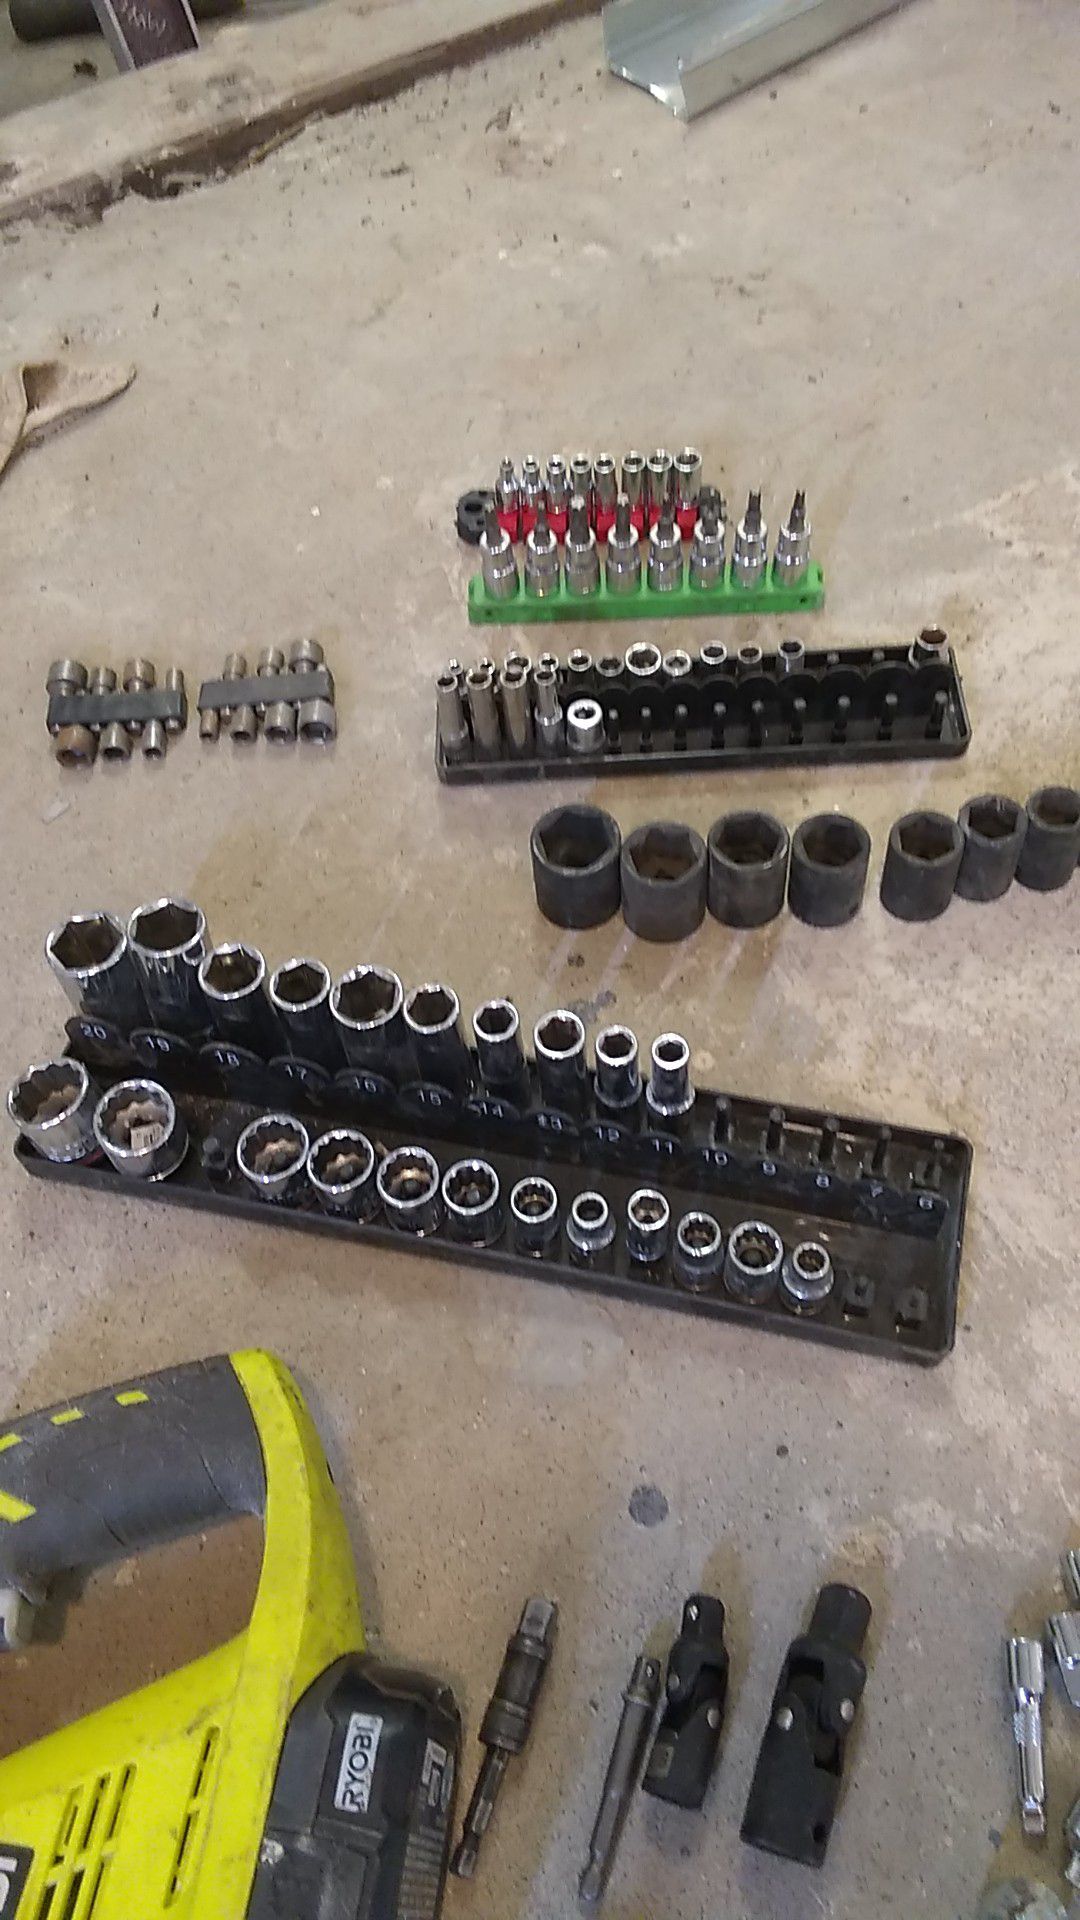 Ryobi set wrench set socketset drill bits